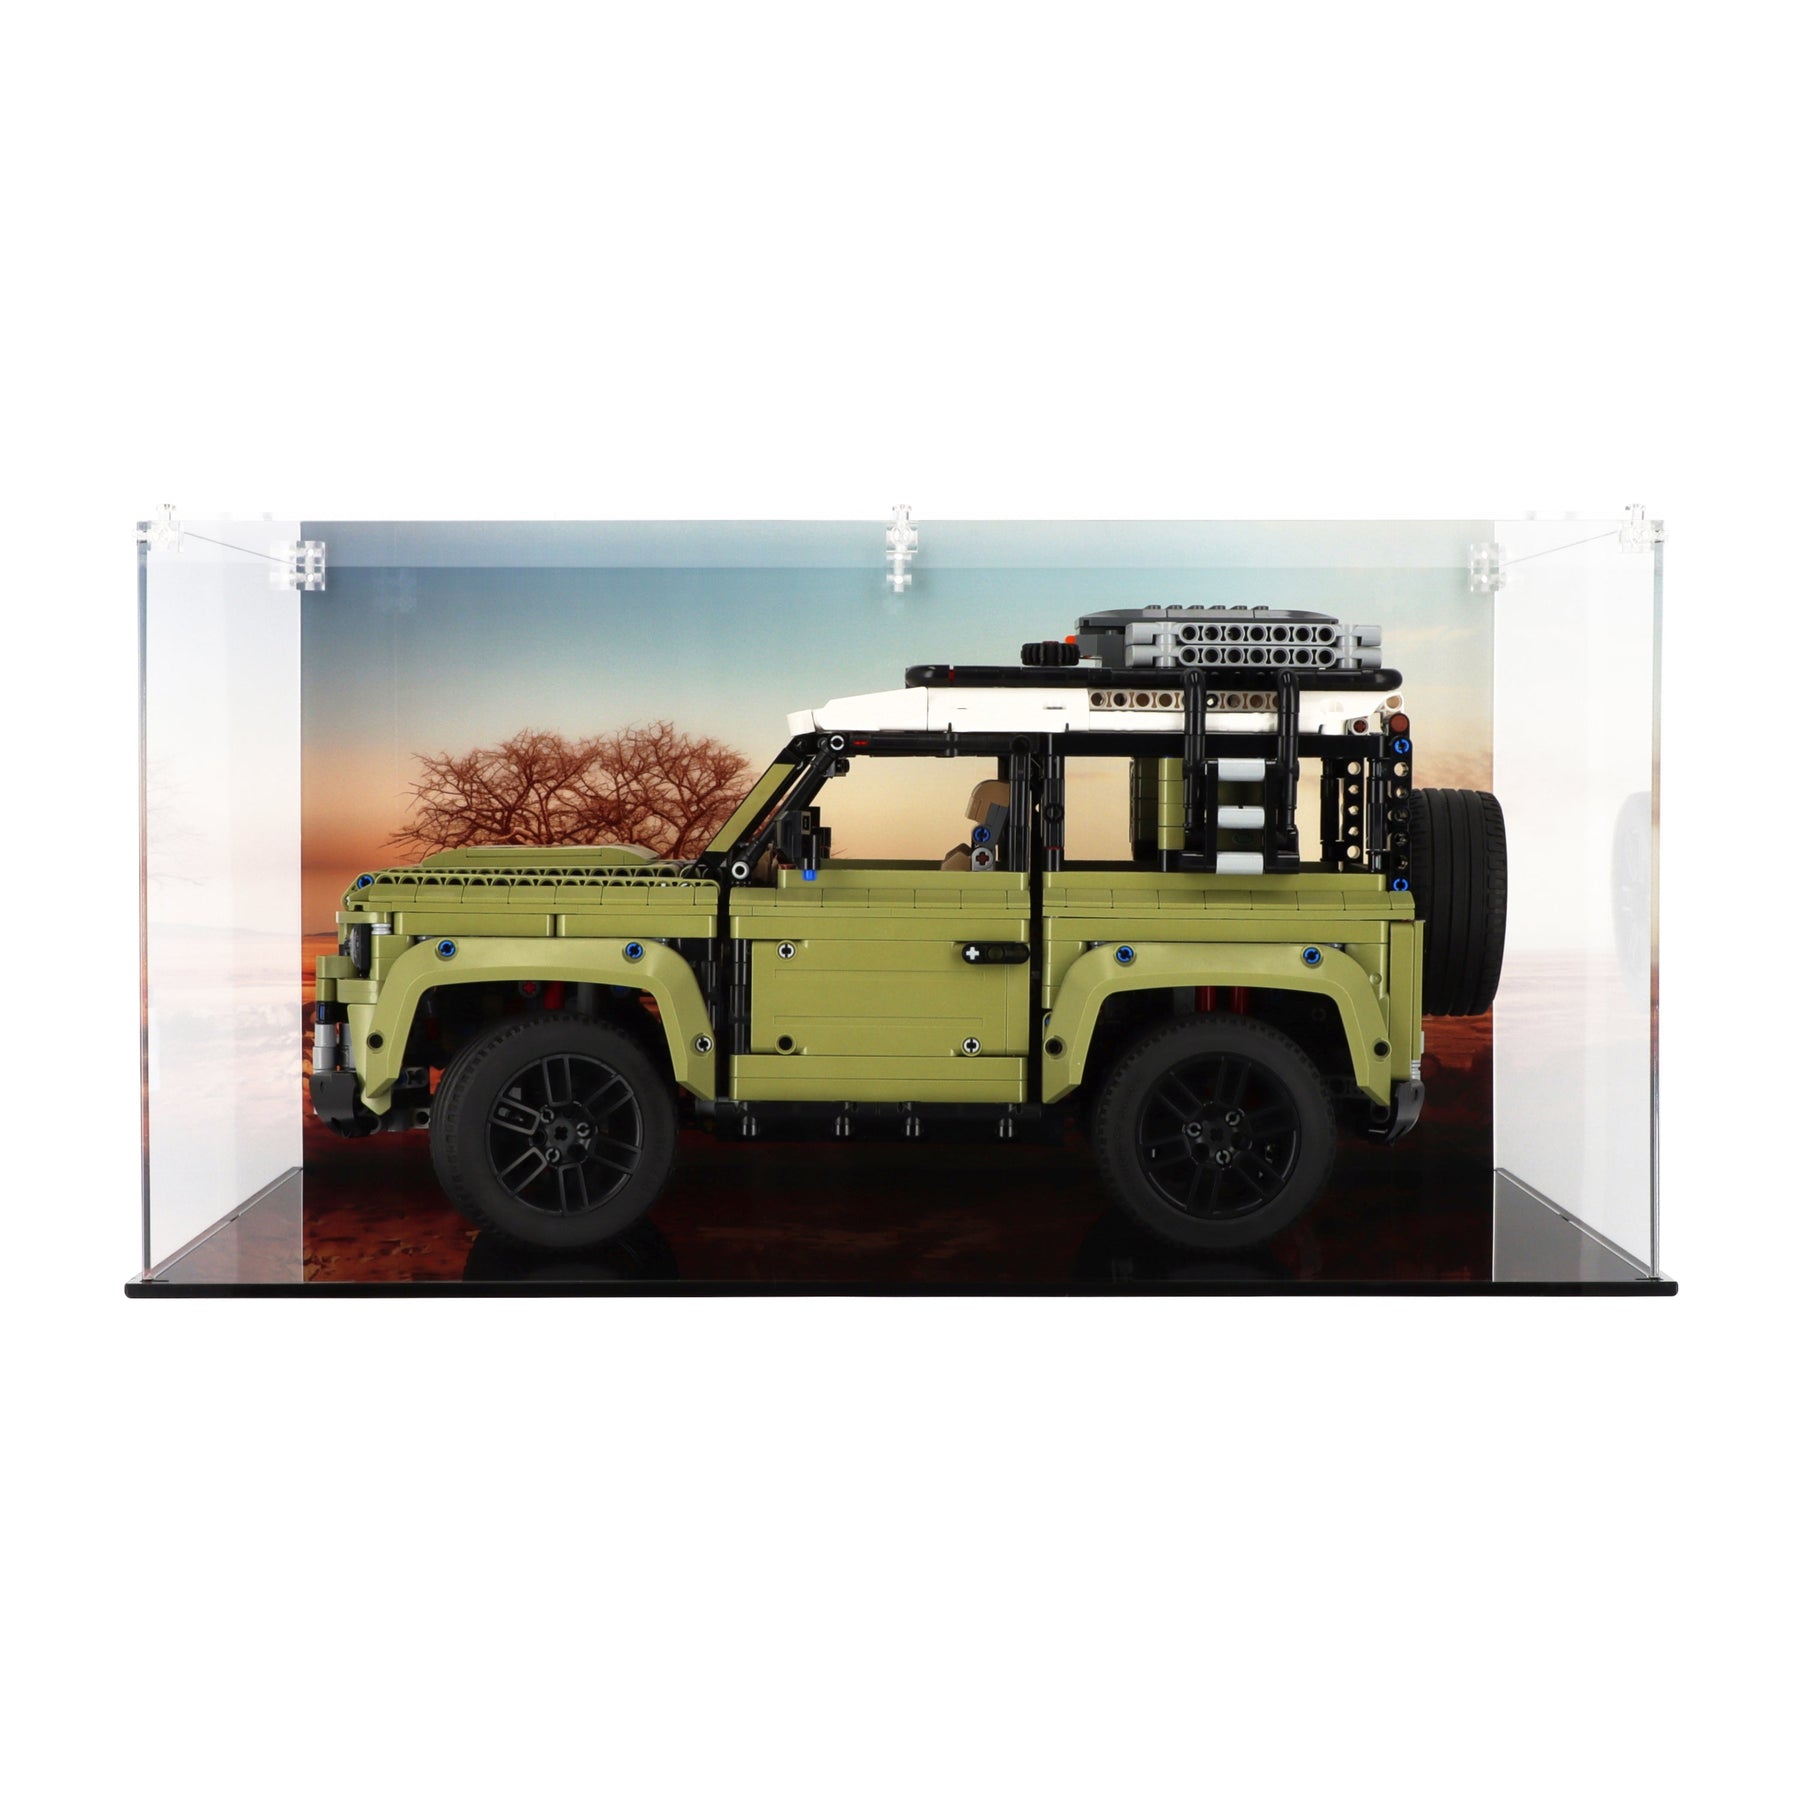 Lego Technic Land Rover 42110 Display Case